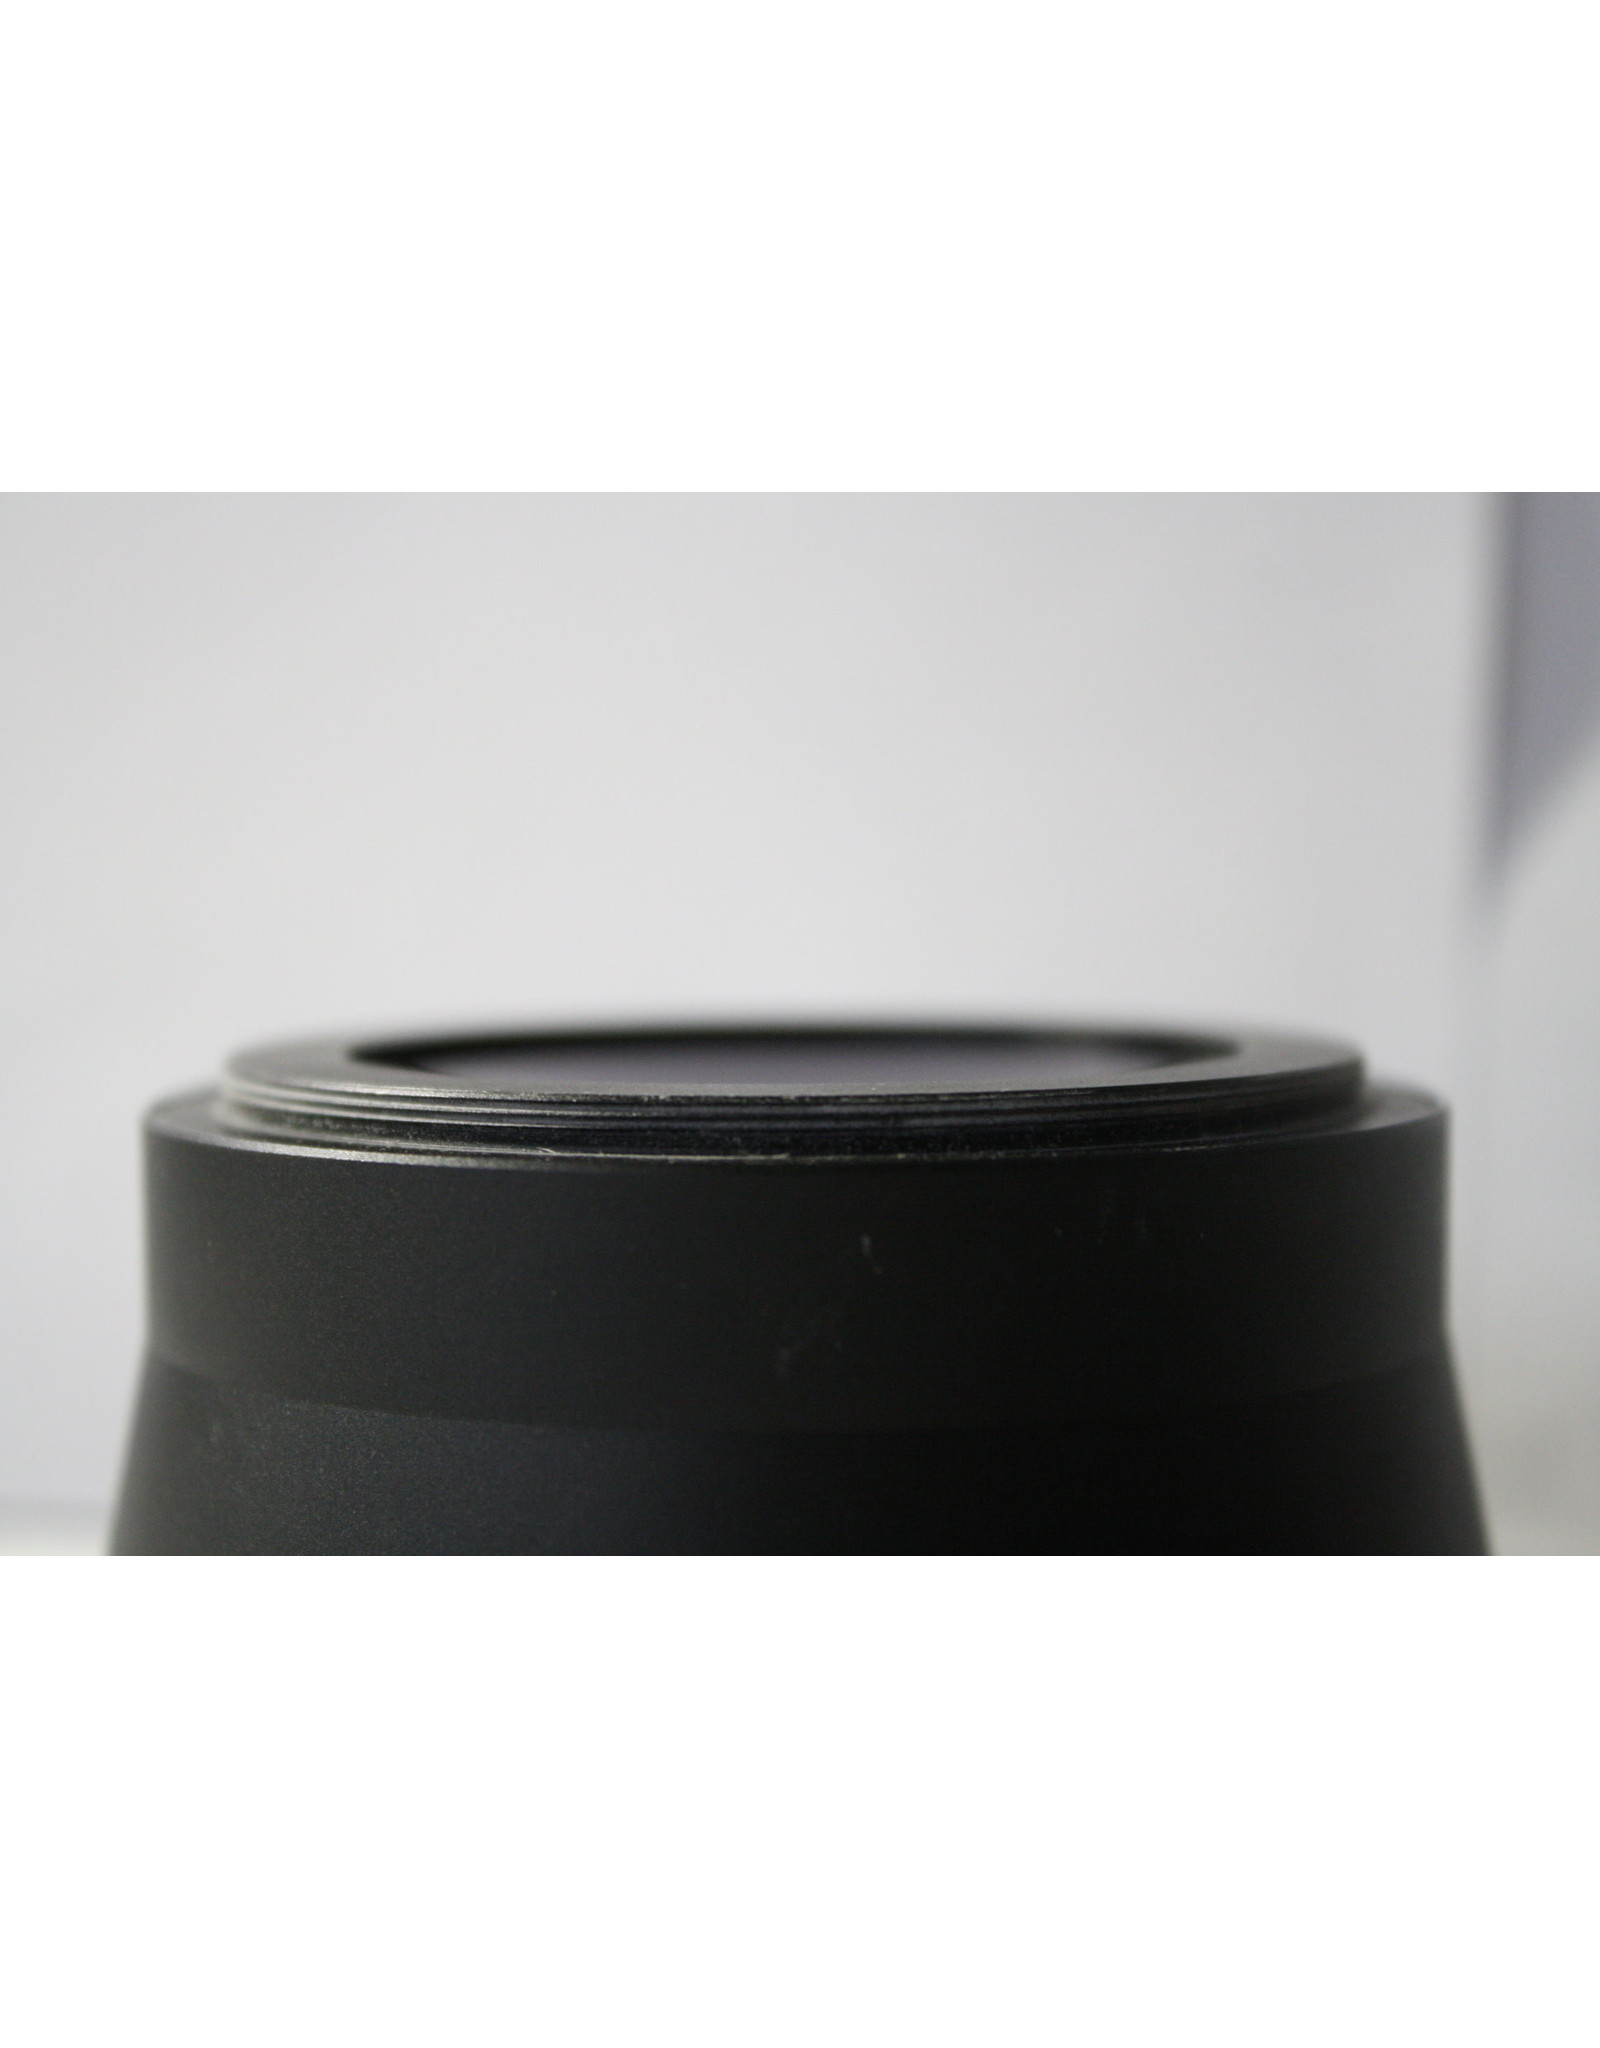 Digital High Definition 2.2X Telephoto Lens (72mm Mount)